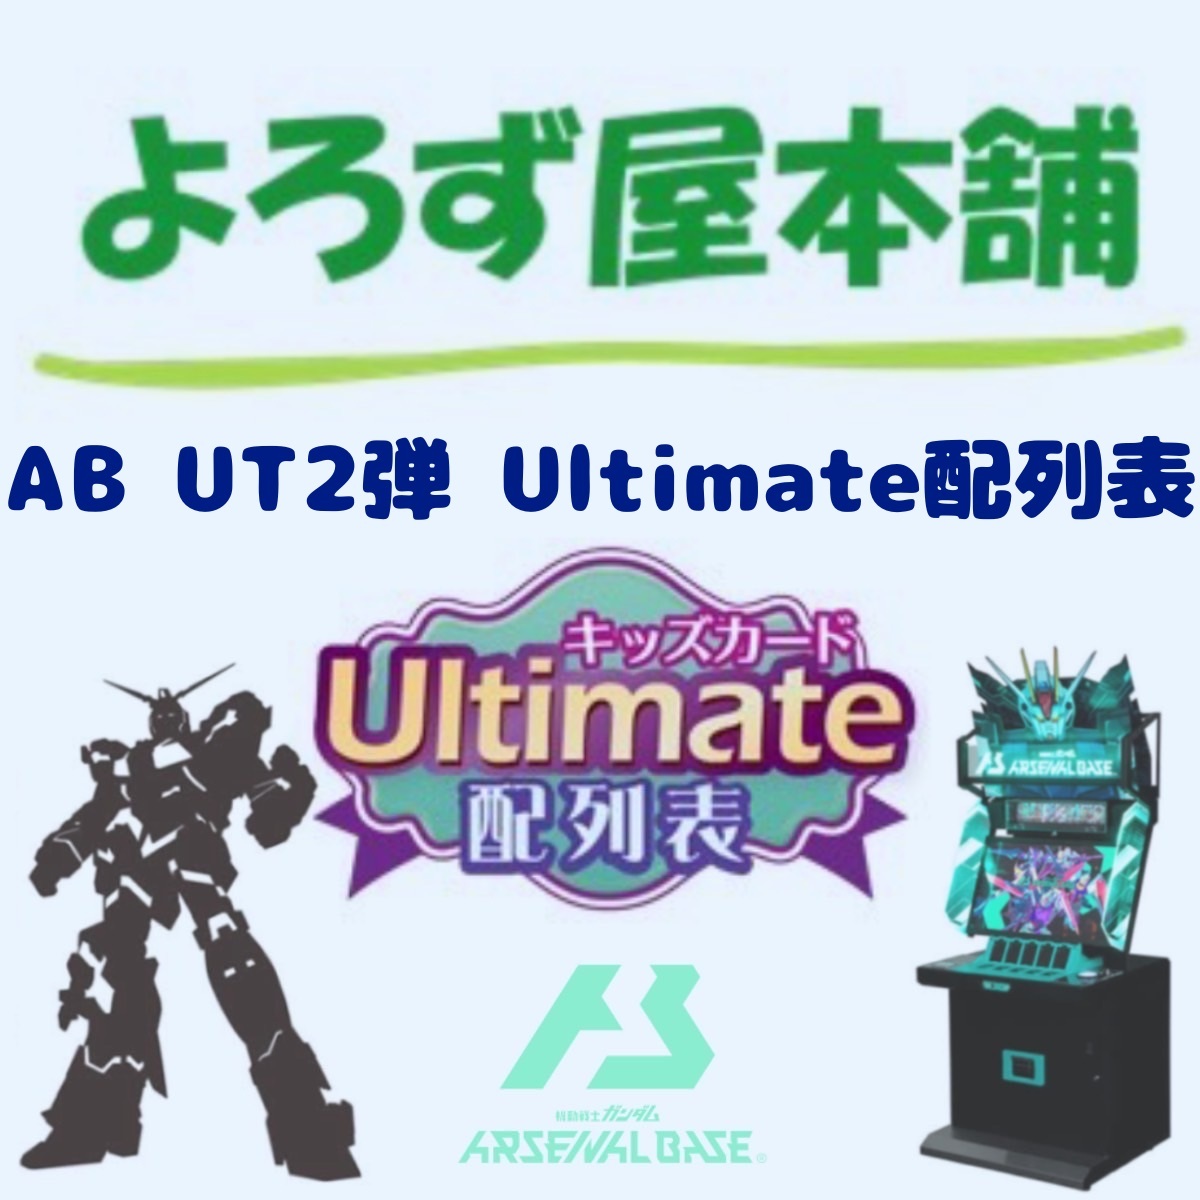 AB UT2弾 Ultimate配列表①の画像1